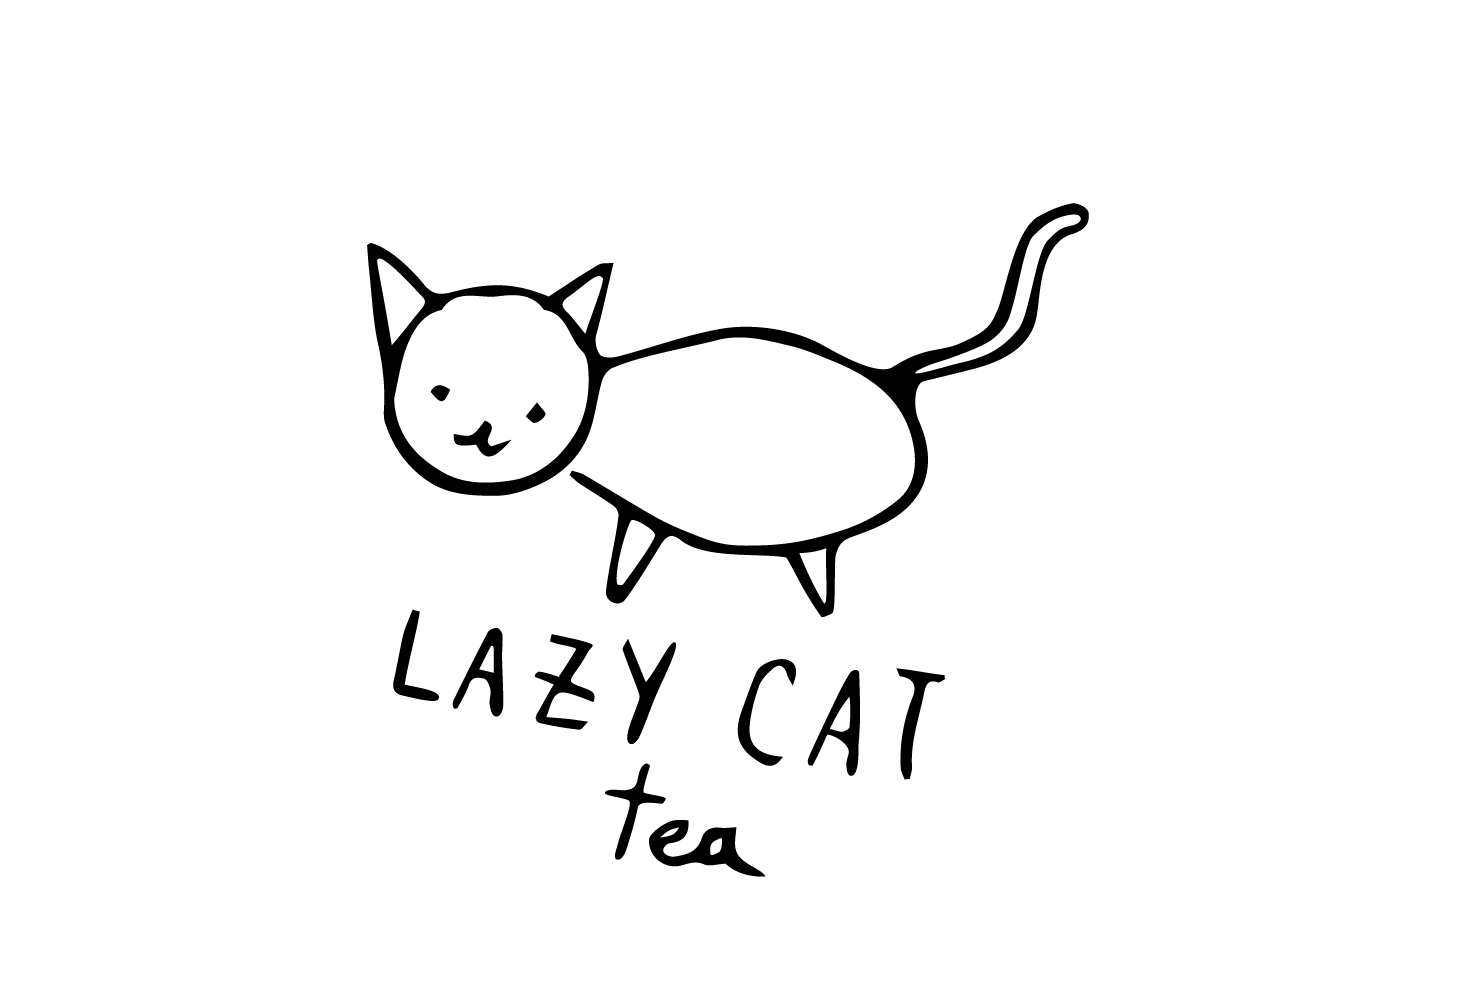 LAZY CAT TEA